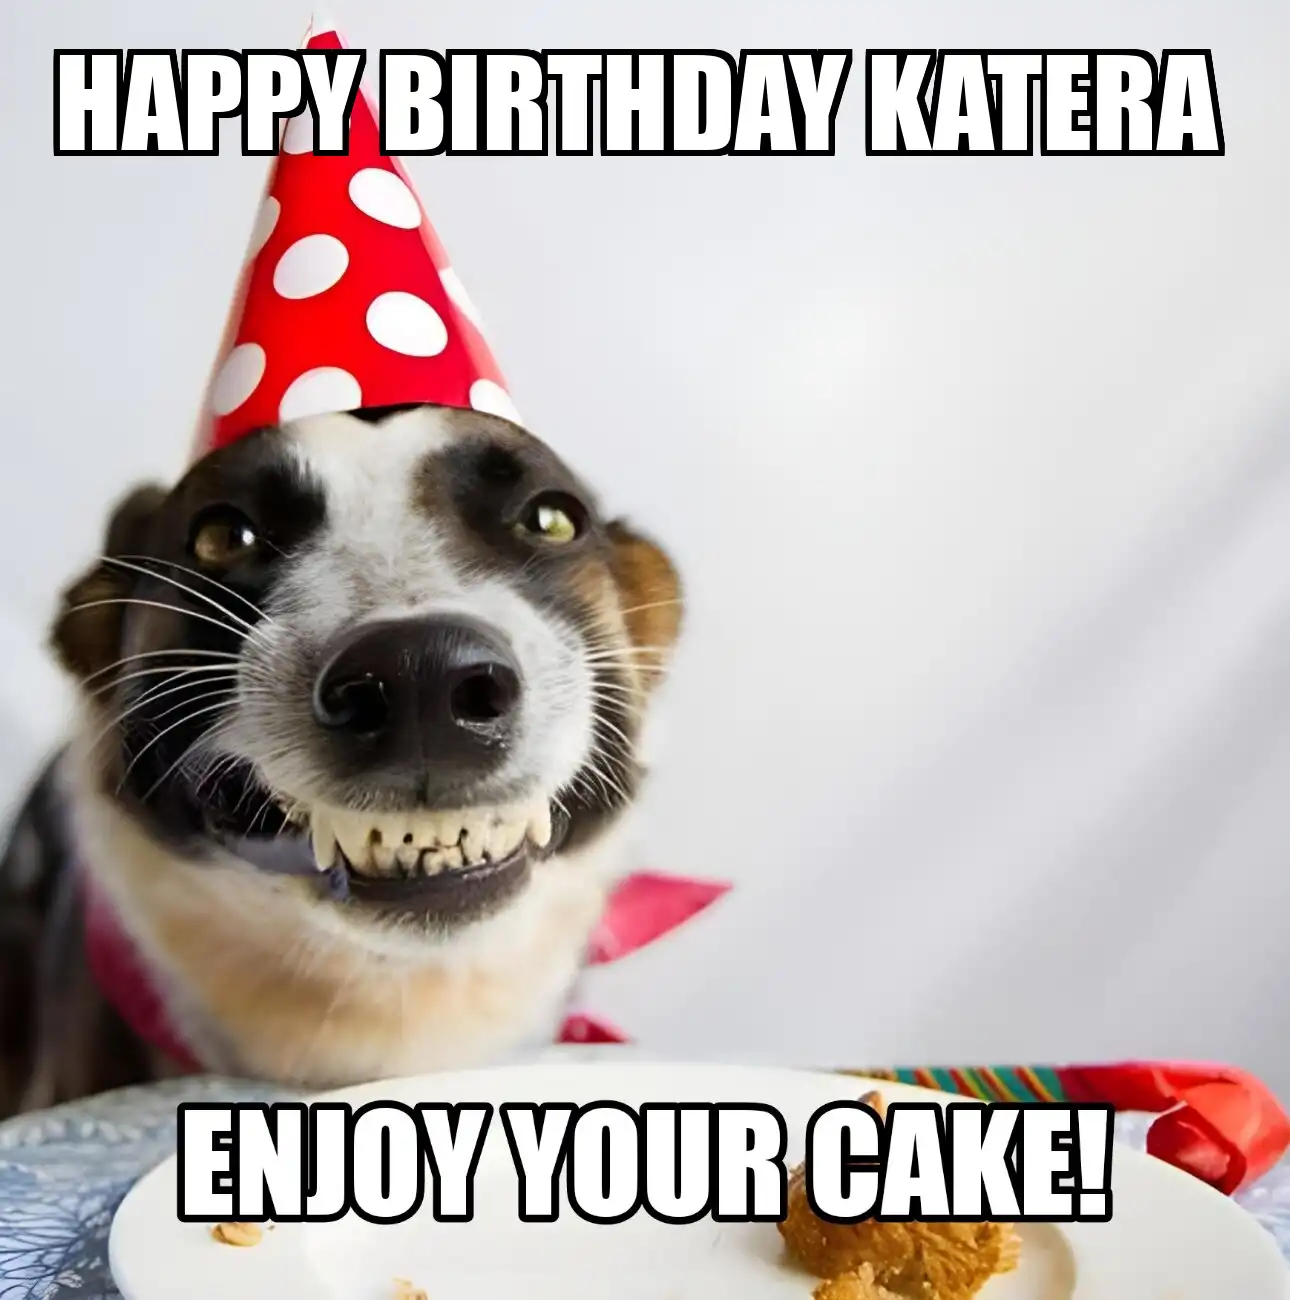 Happy Birthday Katera Enjoy Your Cake Dog Meme